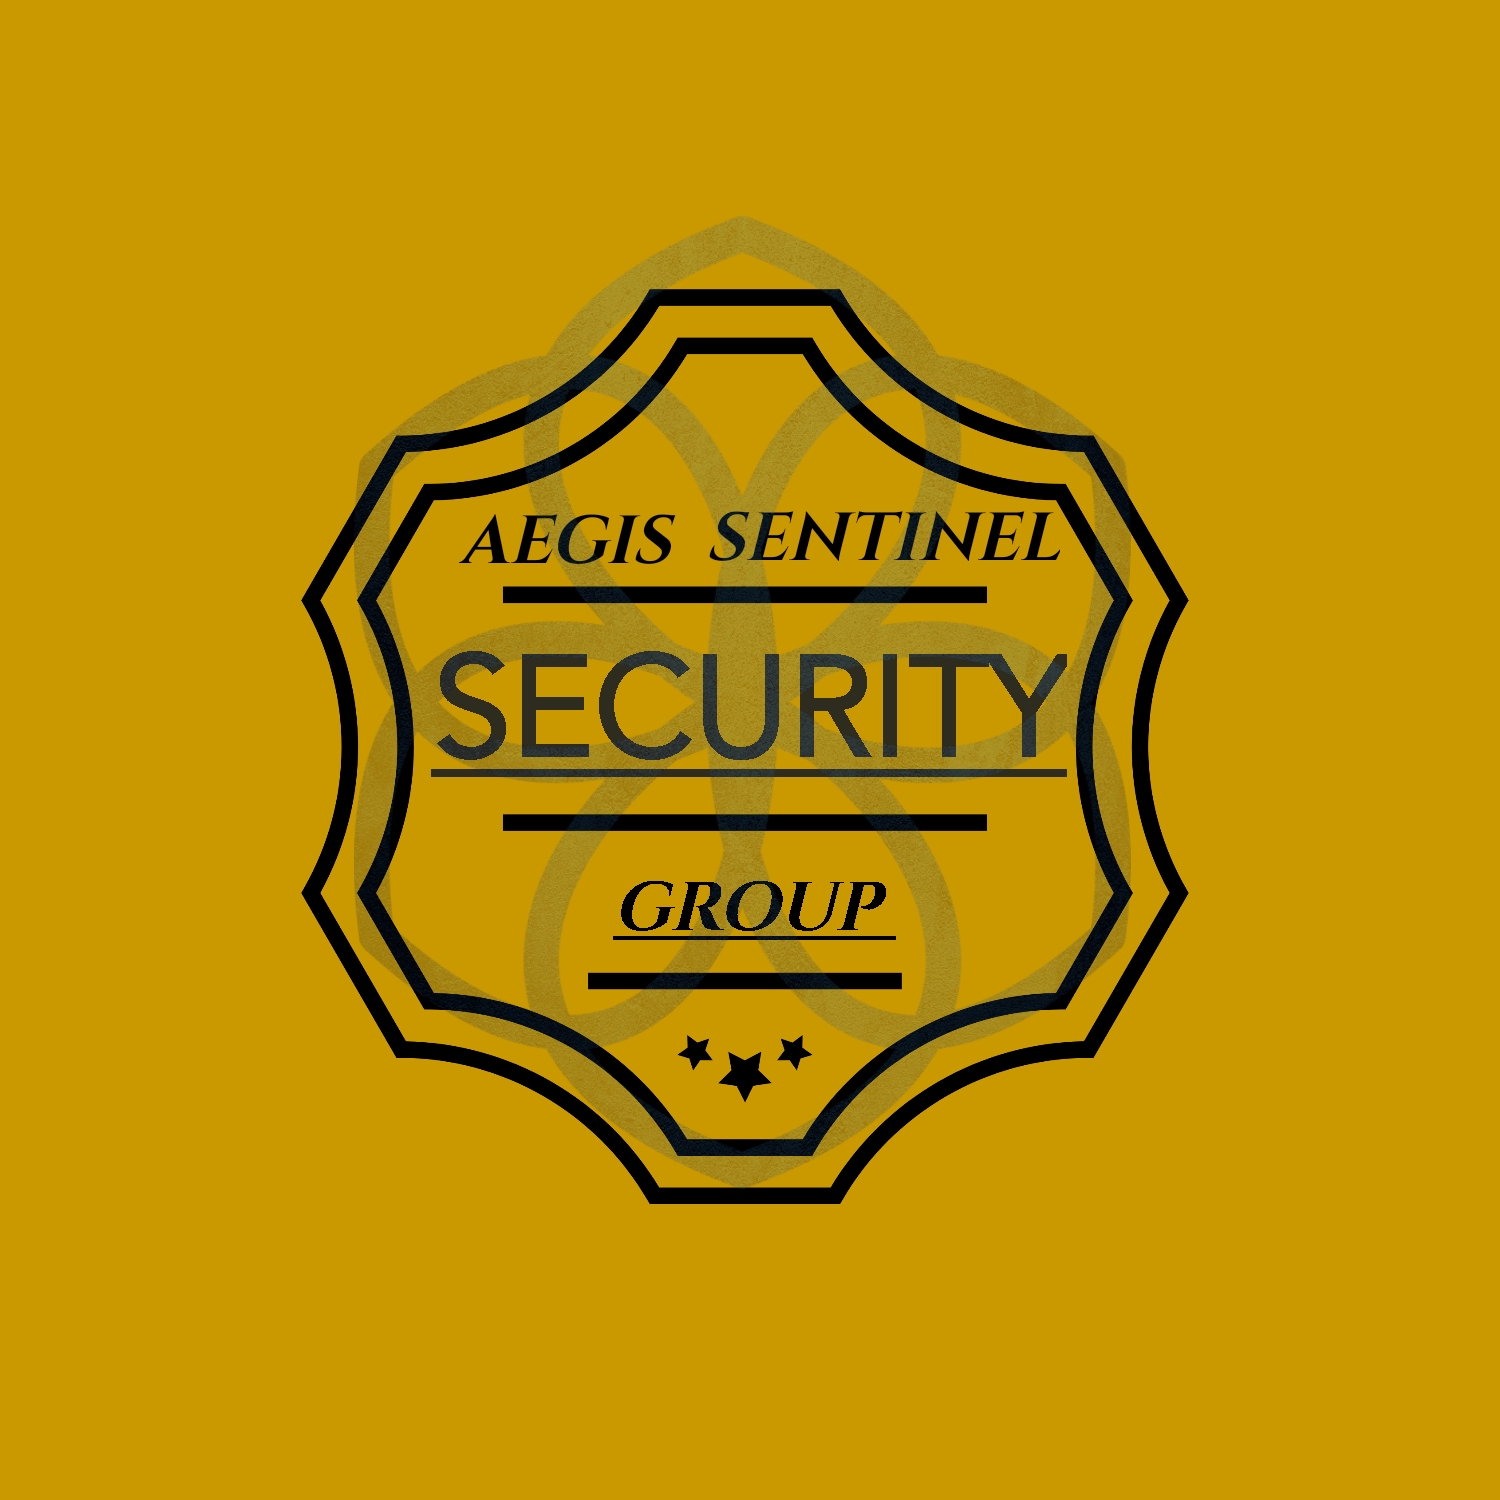 New Mexico Aegis Sentinel Group